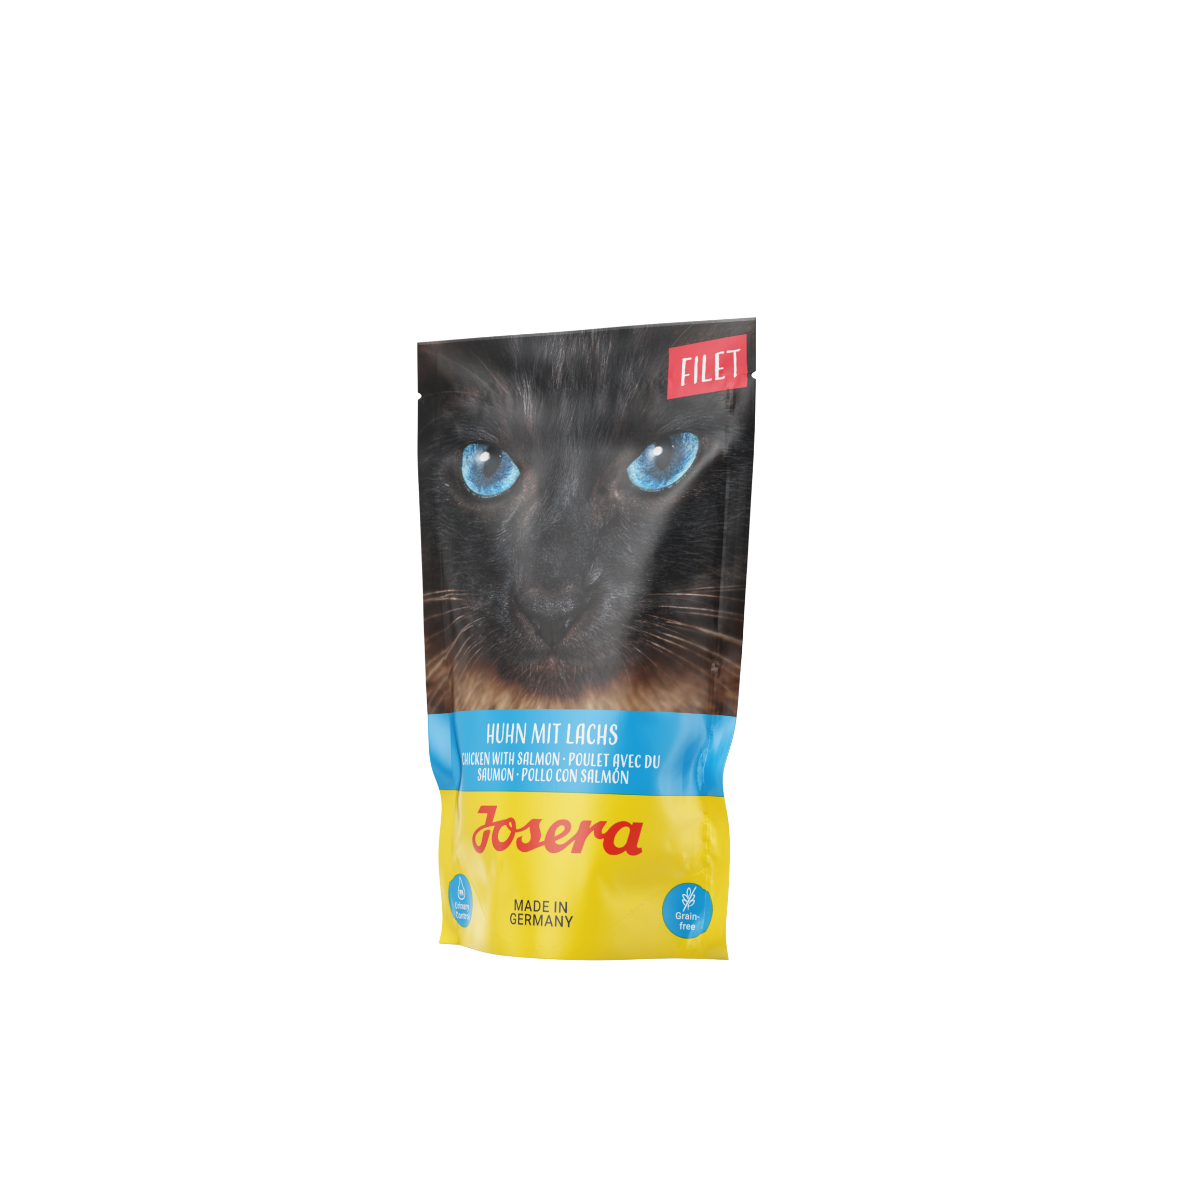 Josera Filet pack de comida húmeda para gatos